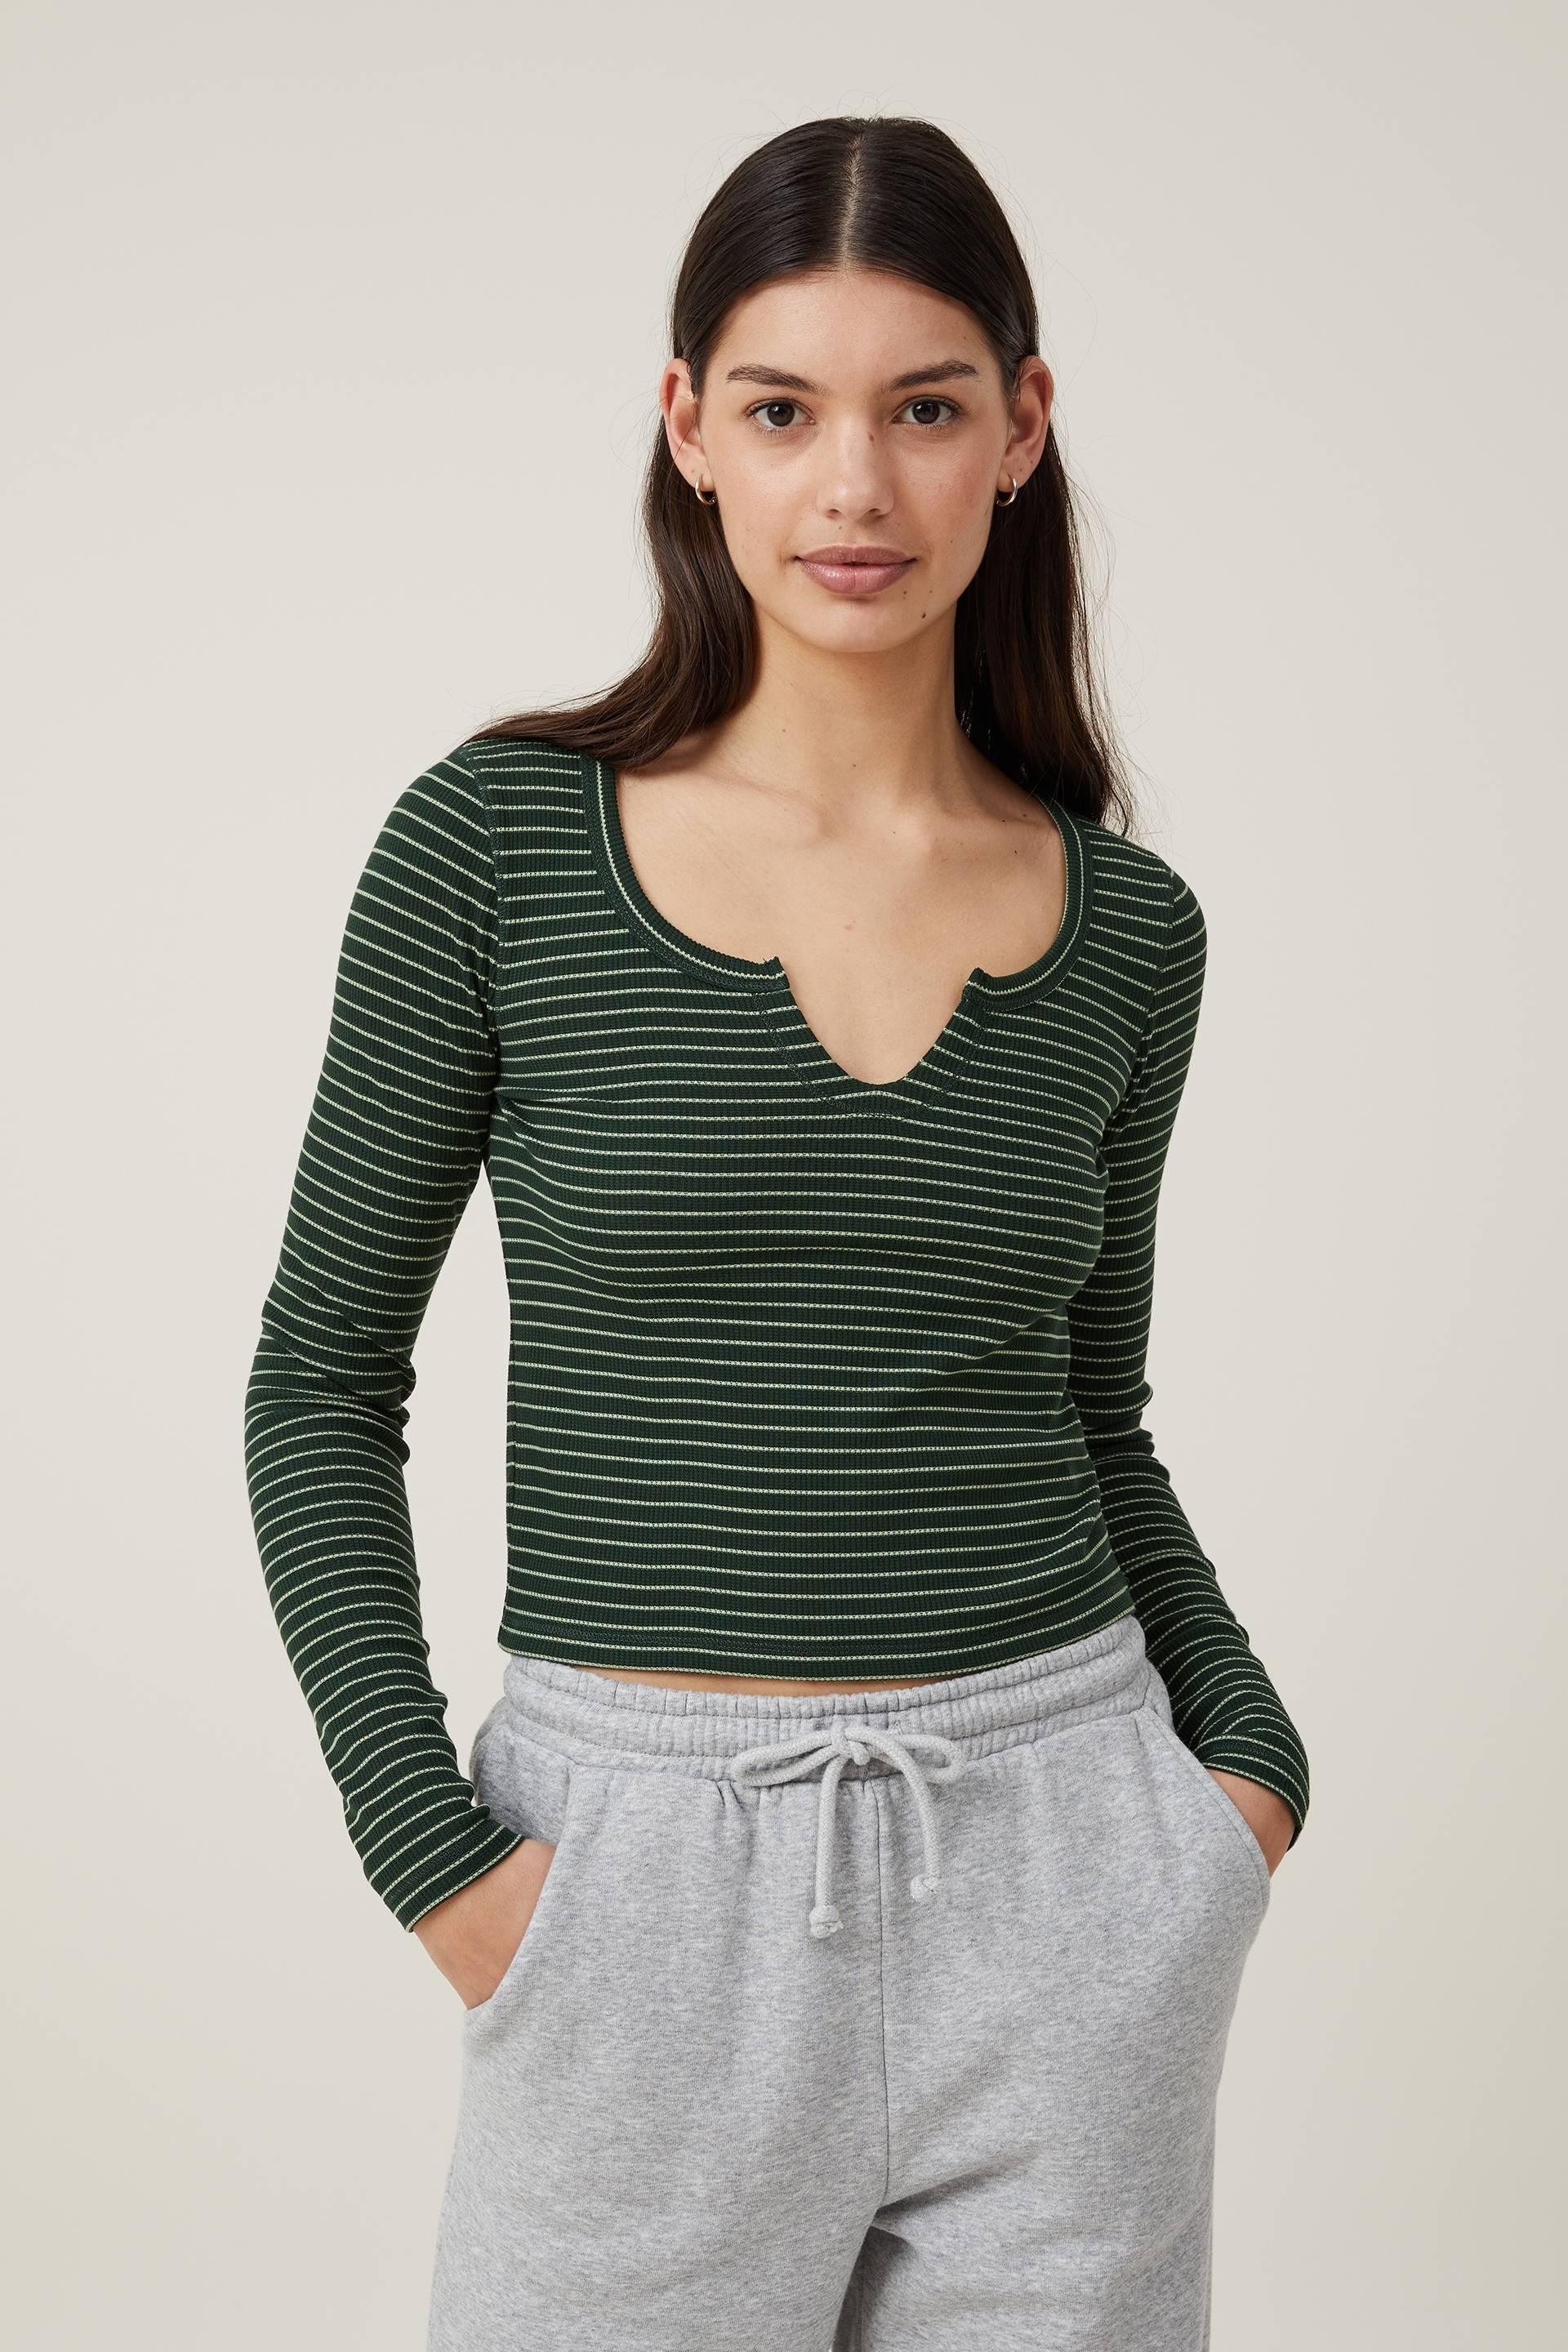 Cotton On Women - Willa Waffle Long Sleeve Top - Chloe stripe alpine forest/sage green